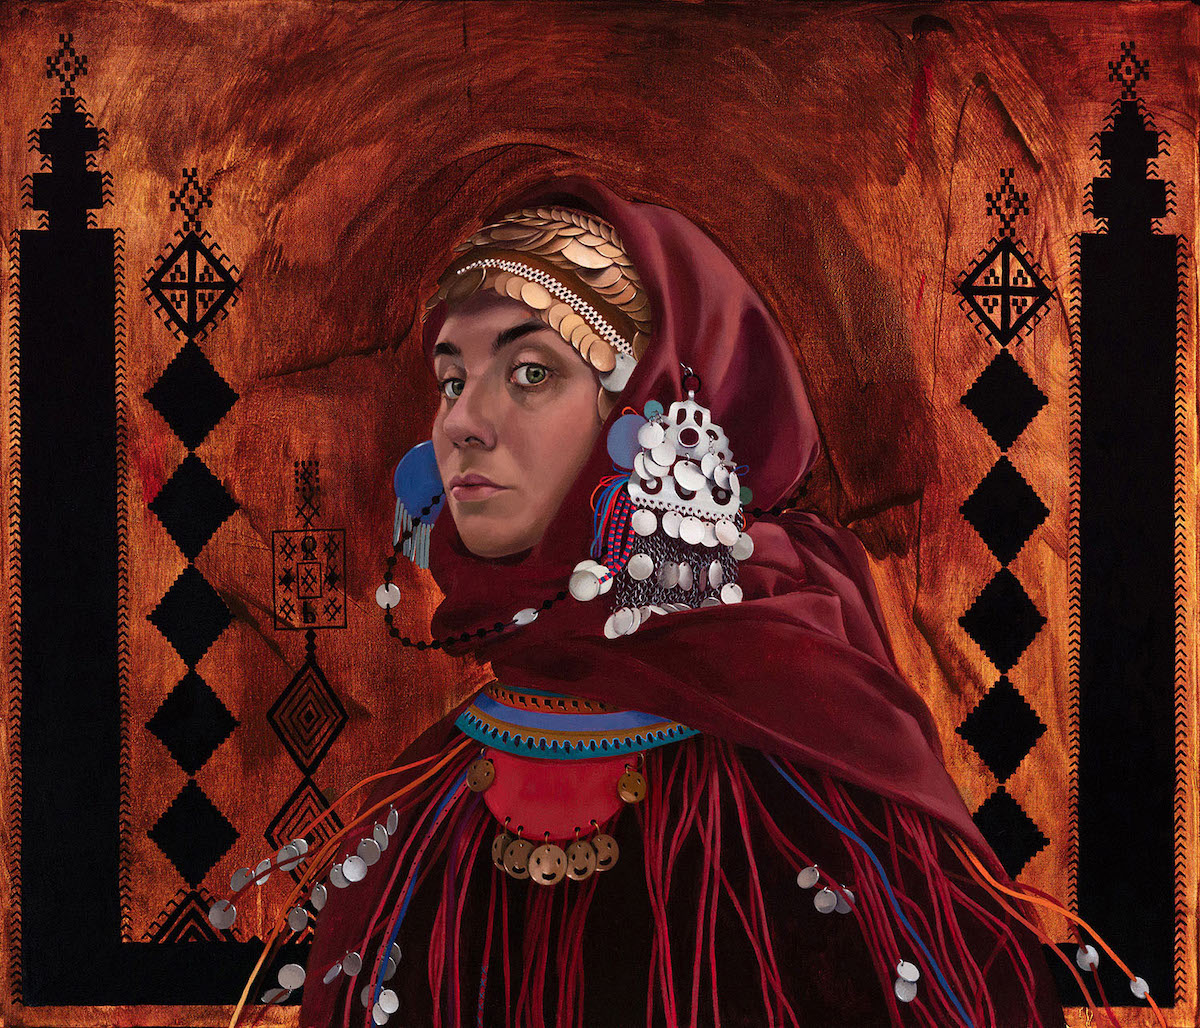 Retrato inspirado en la cultura búlgara por Simona Ruscheva